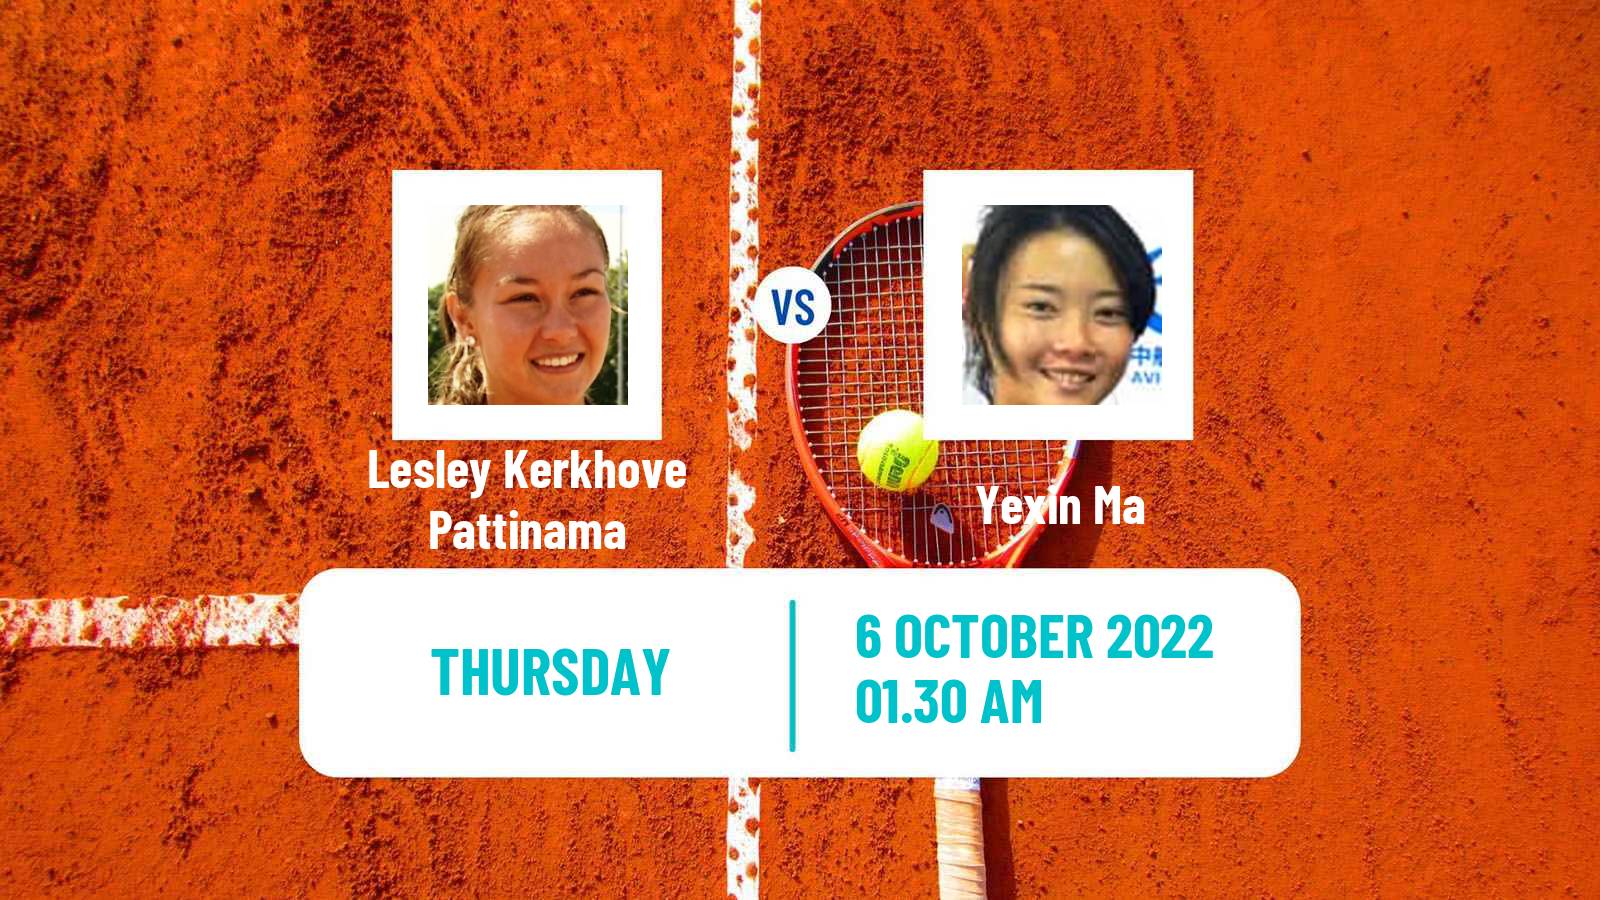 Tennis ITF Tournaments Lesley Kerkhove Pattinama - Yexin Ma